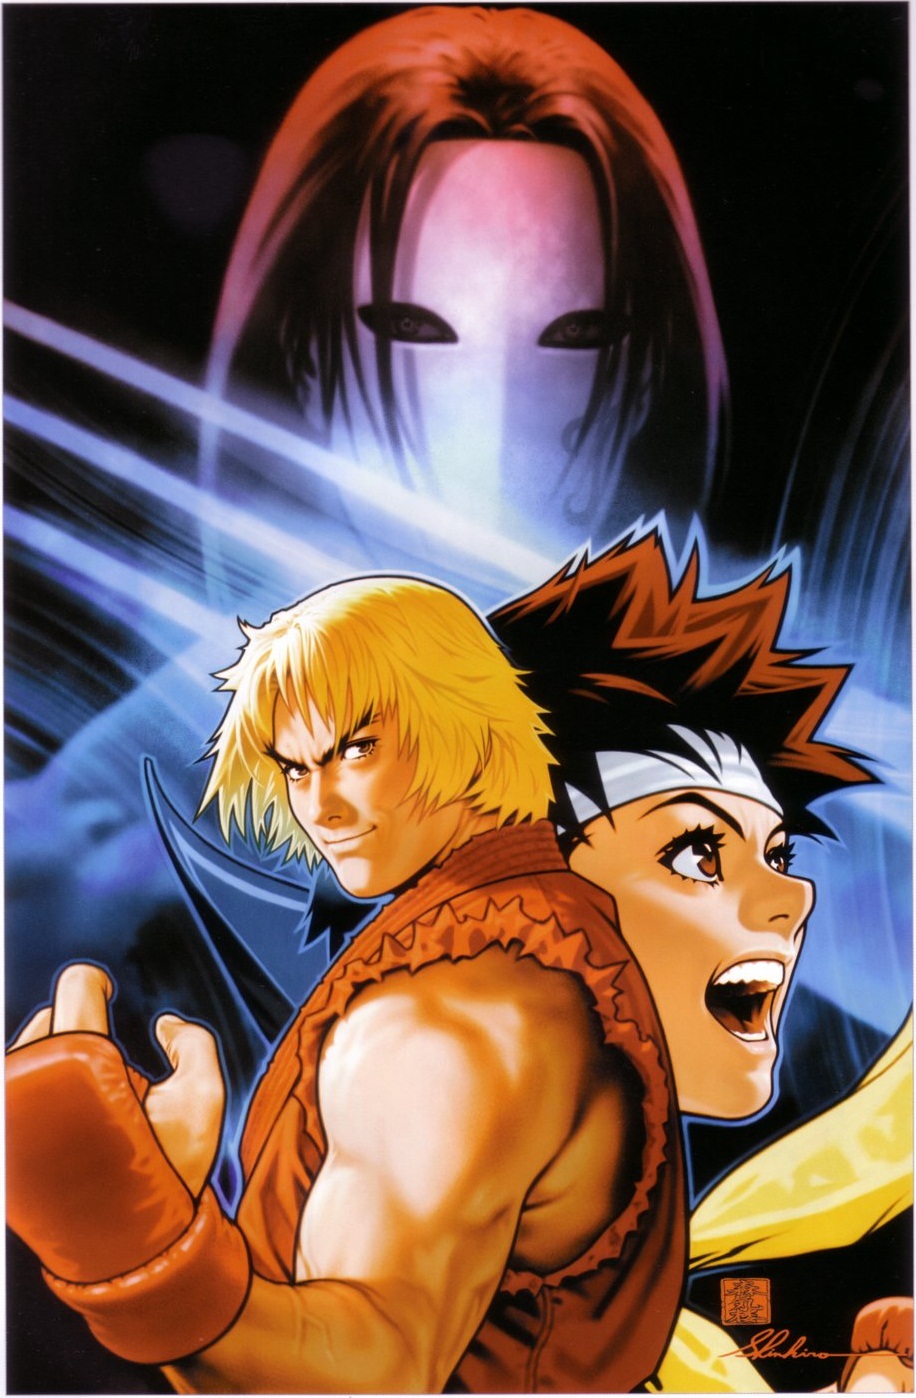 Poster Art ~ Street Fighter by Shinkiro